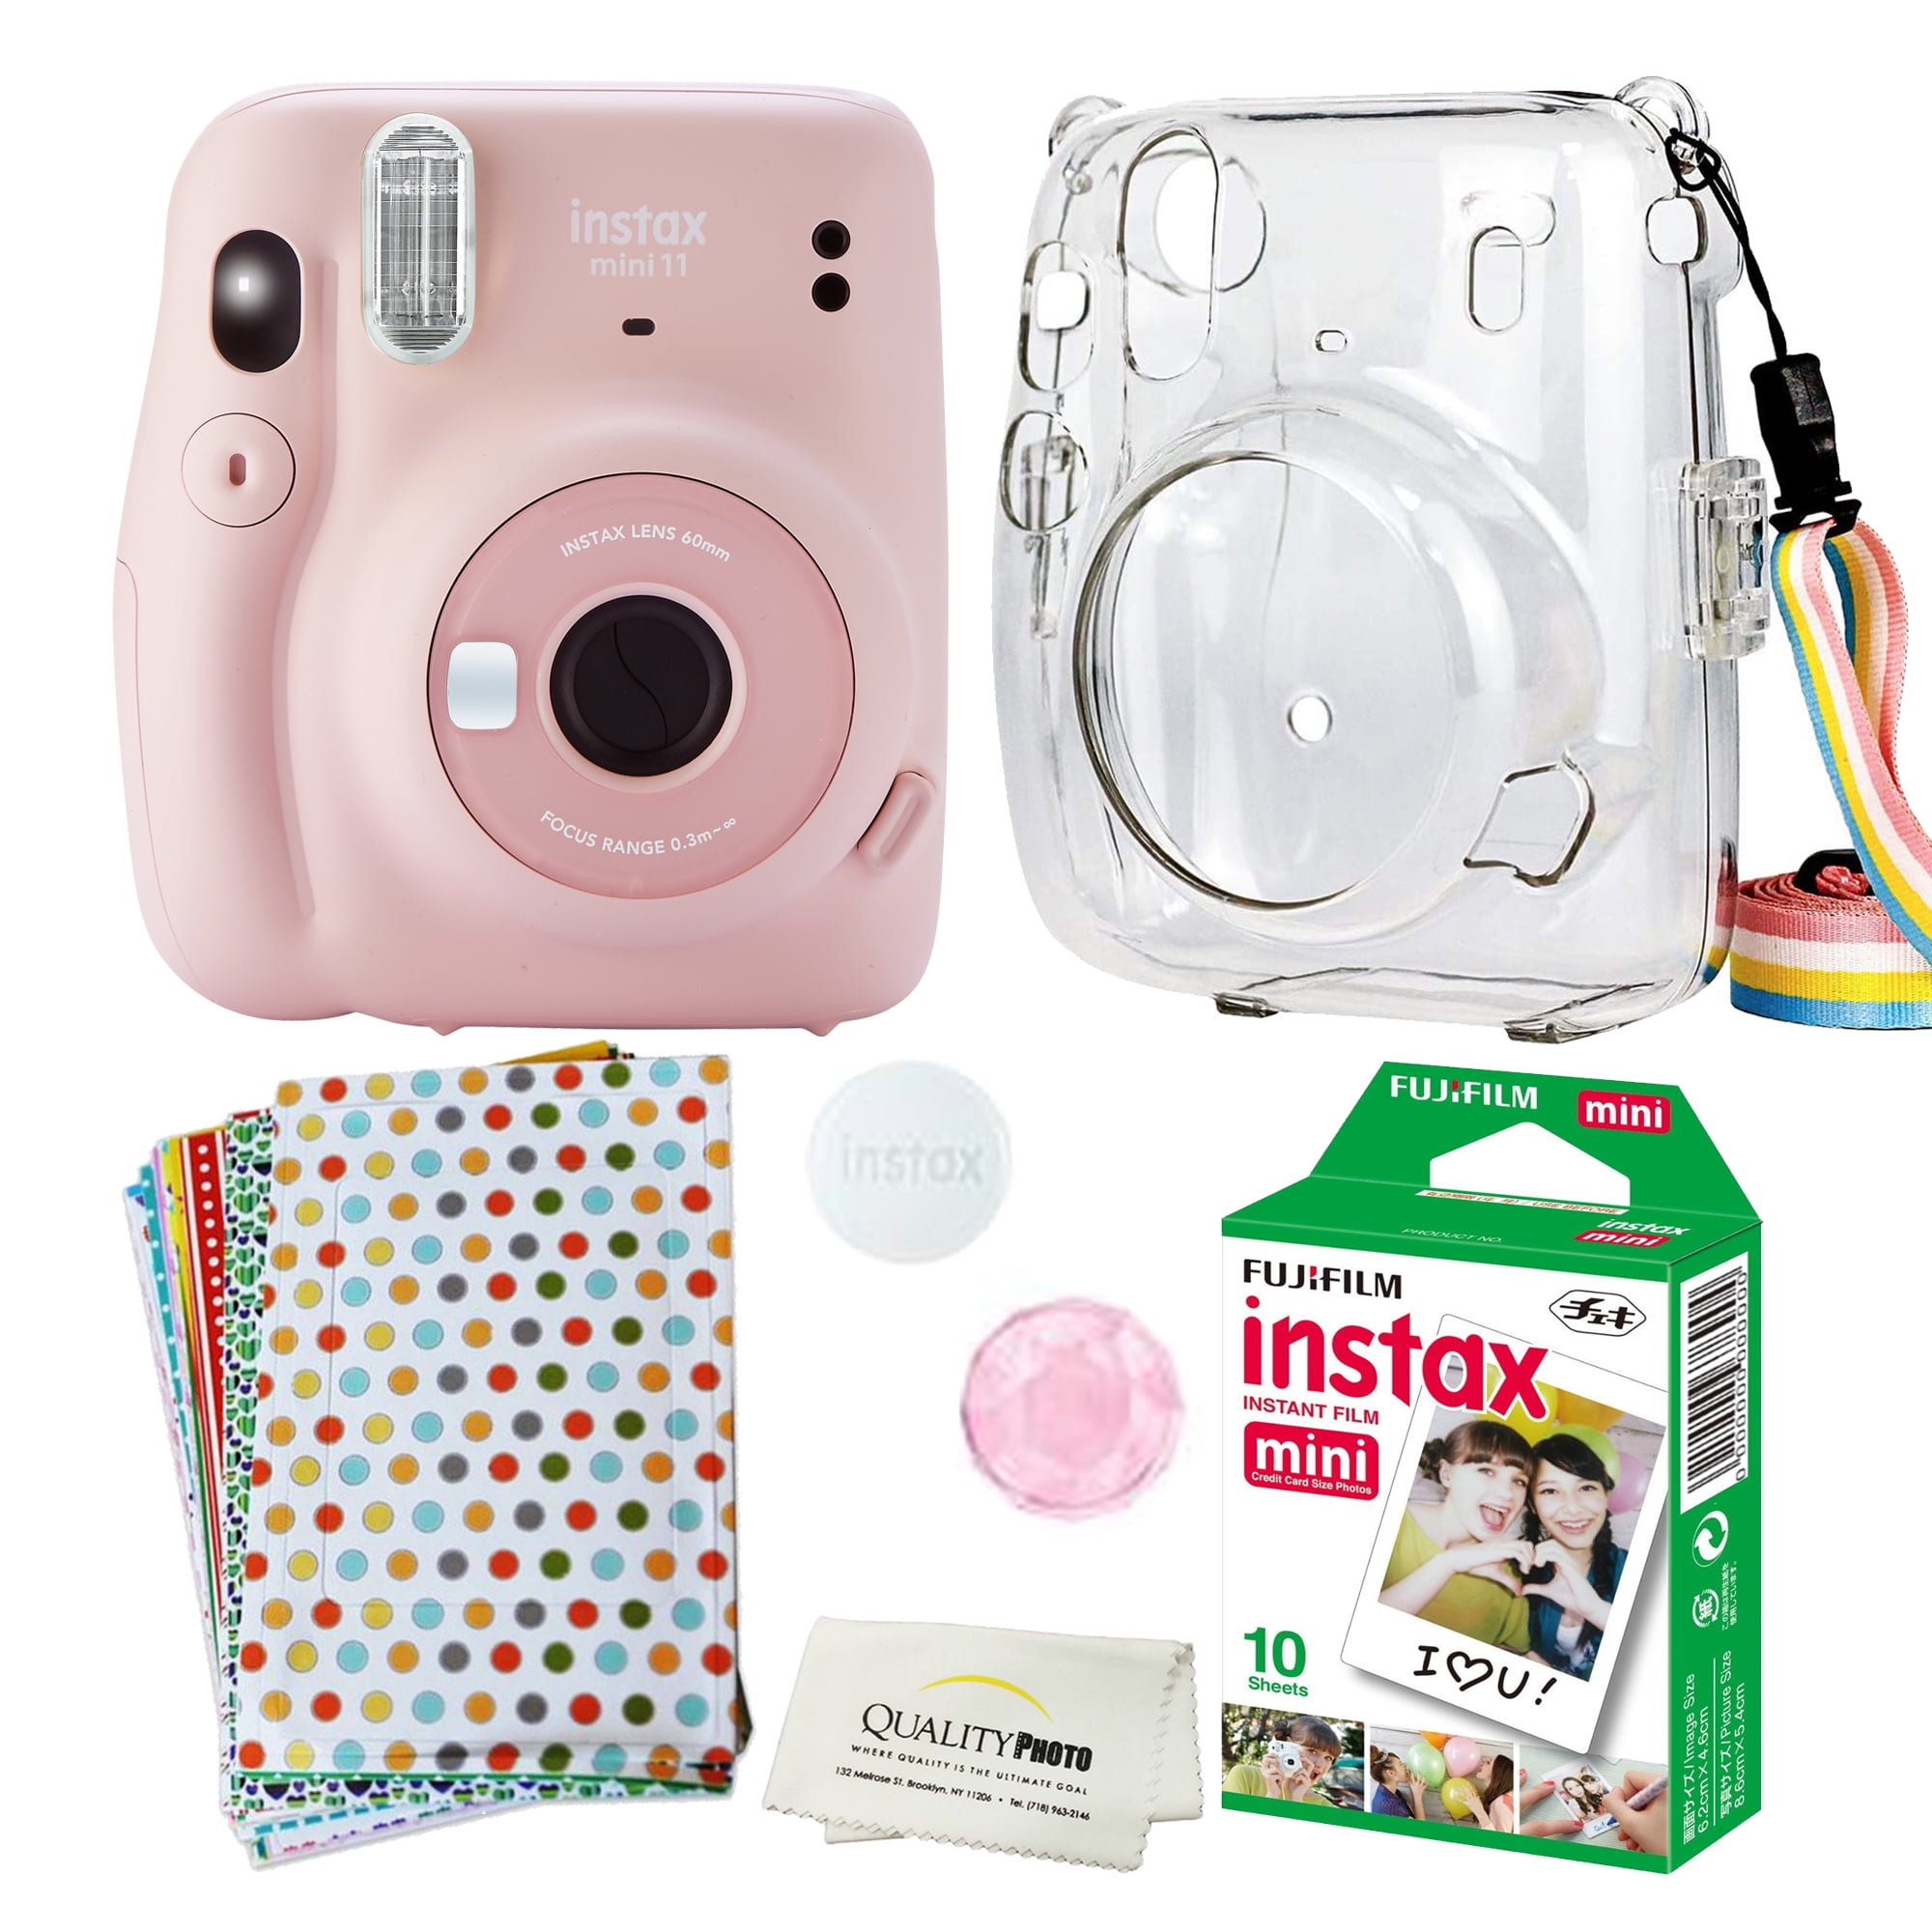 Fujifilm Instax Mini Clear Case, films and stickers bundle - Walmart.com